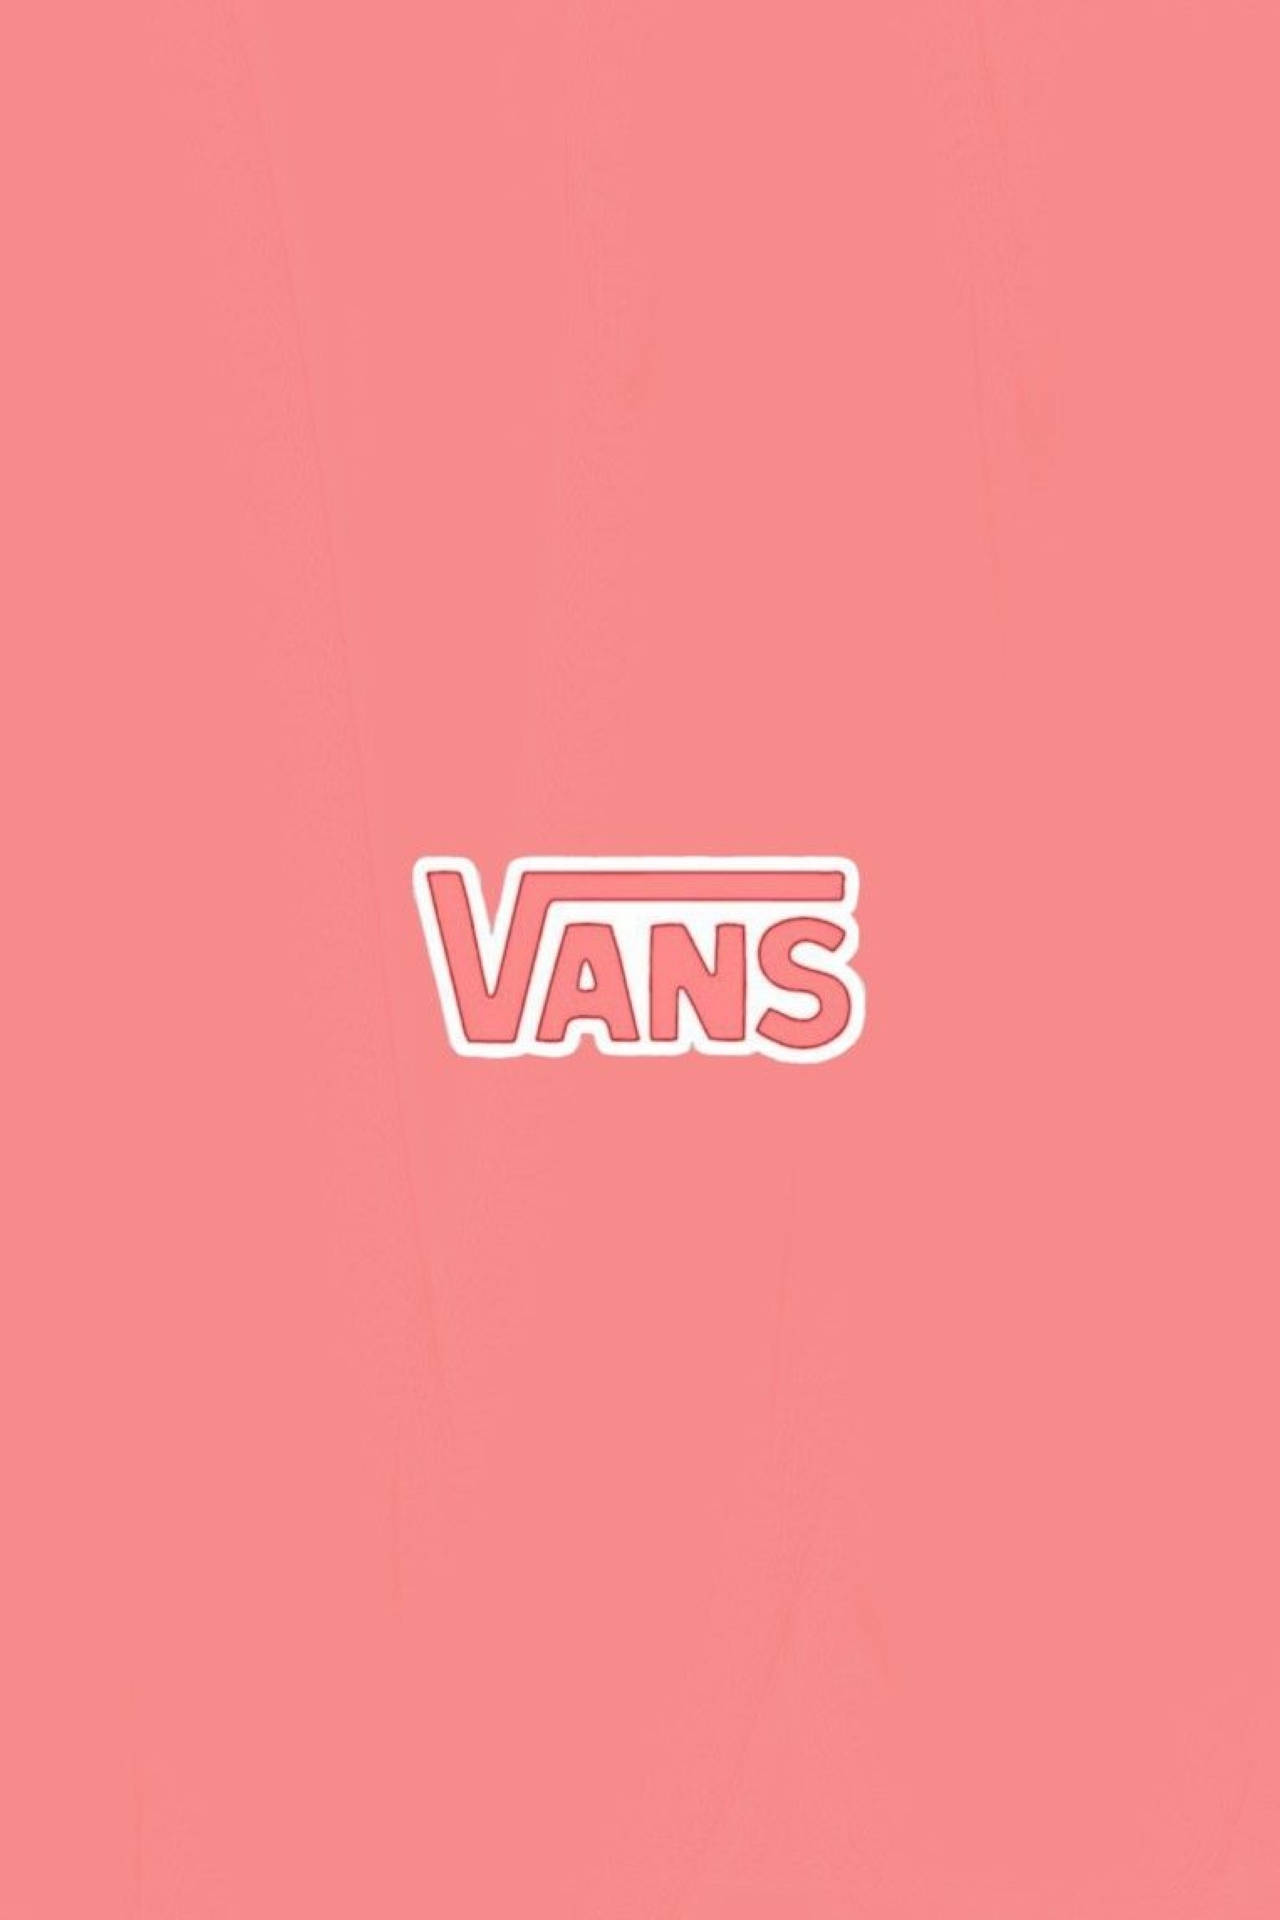 Top 999+ Vans Logo Wallpapers Full HD, 4K✅Free to Use